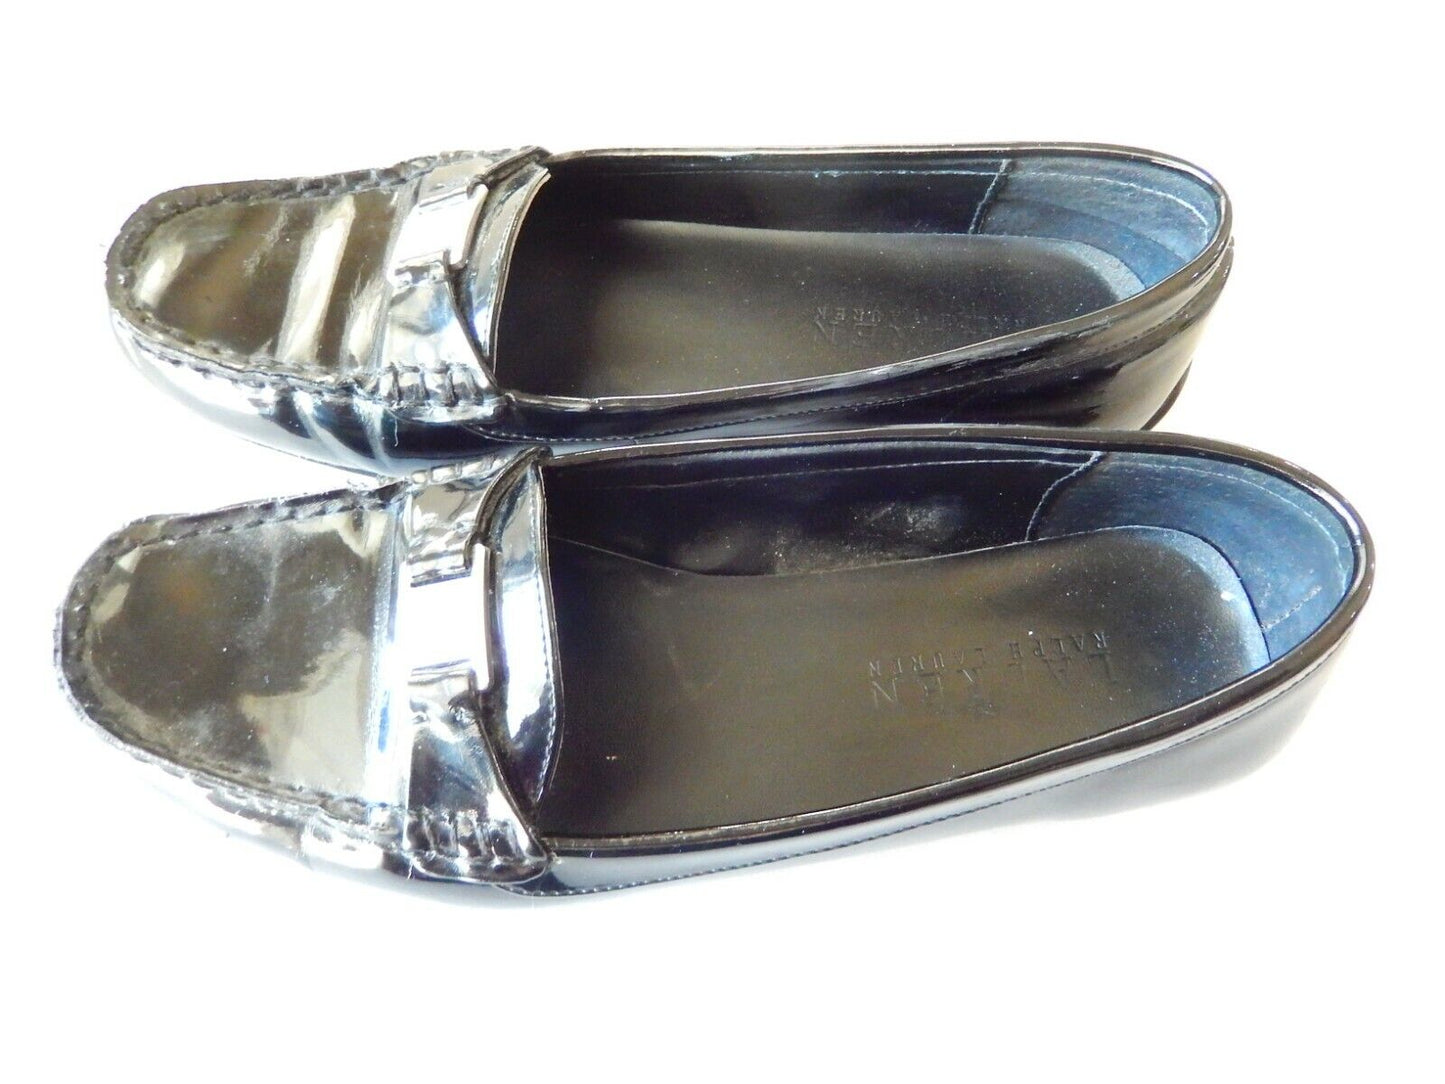 LAUREN RALPH LAUREN Women's 8M Loafers Black Patent Leather Silver Buckle Logo